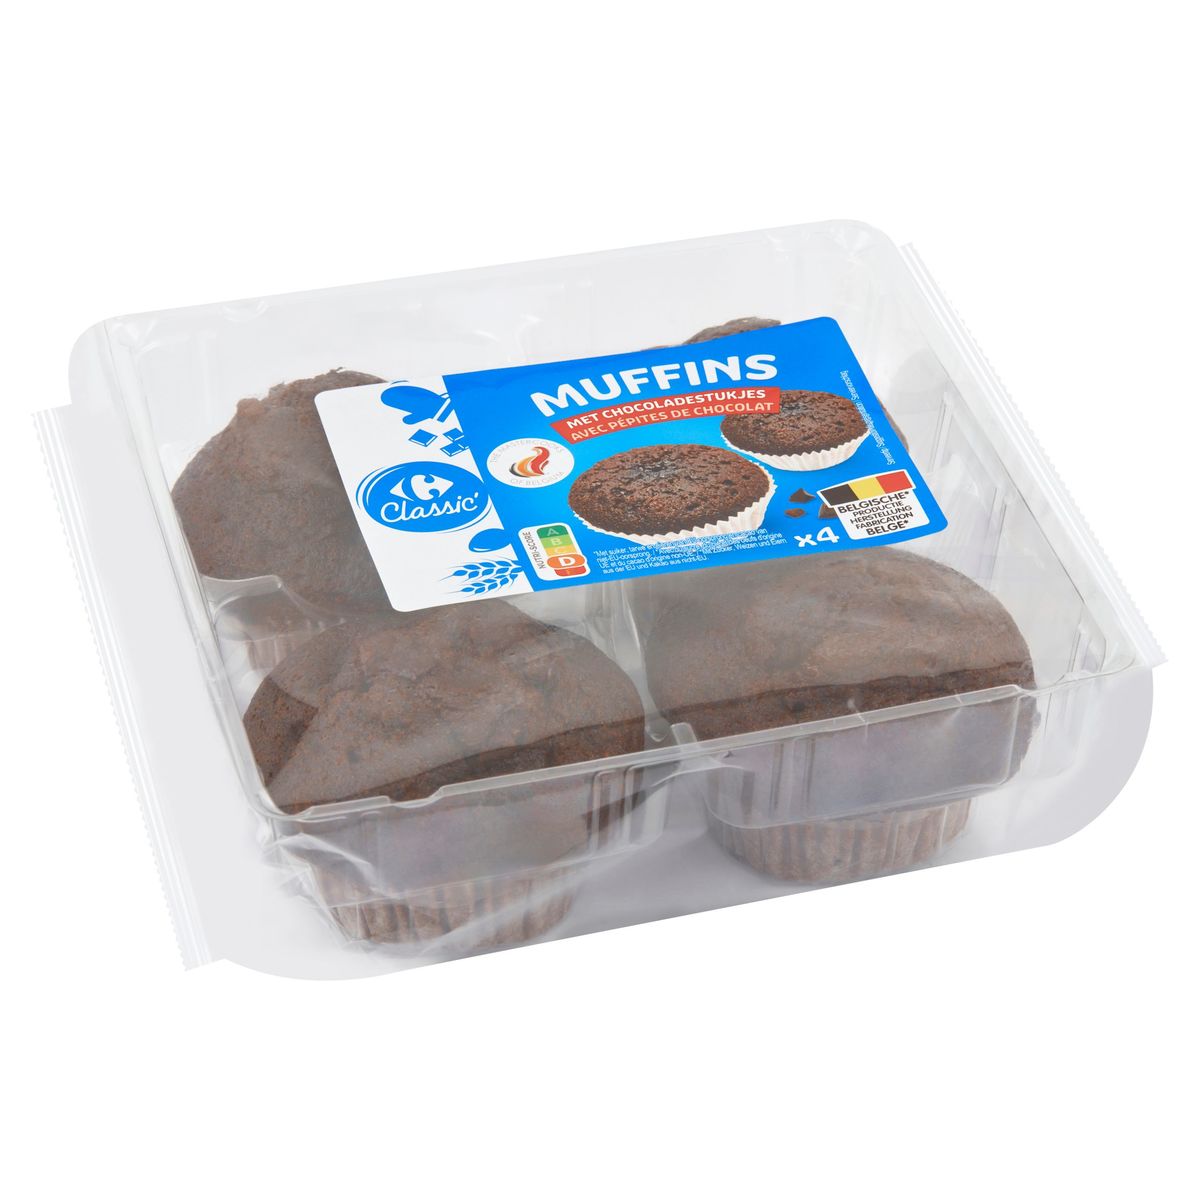 Carrefour Classic' Muffins met Chocoladestukjes 4 x 75 g